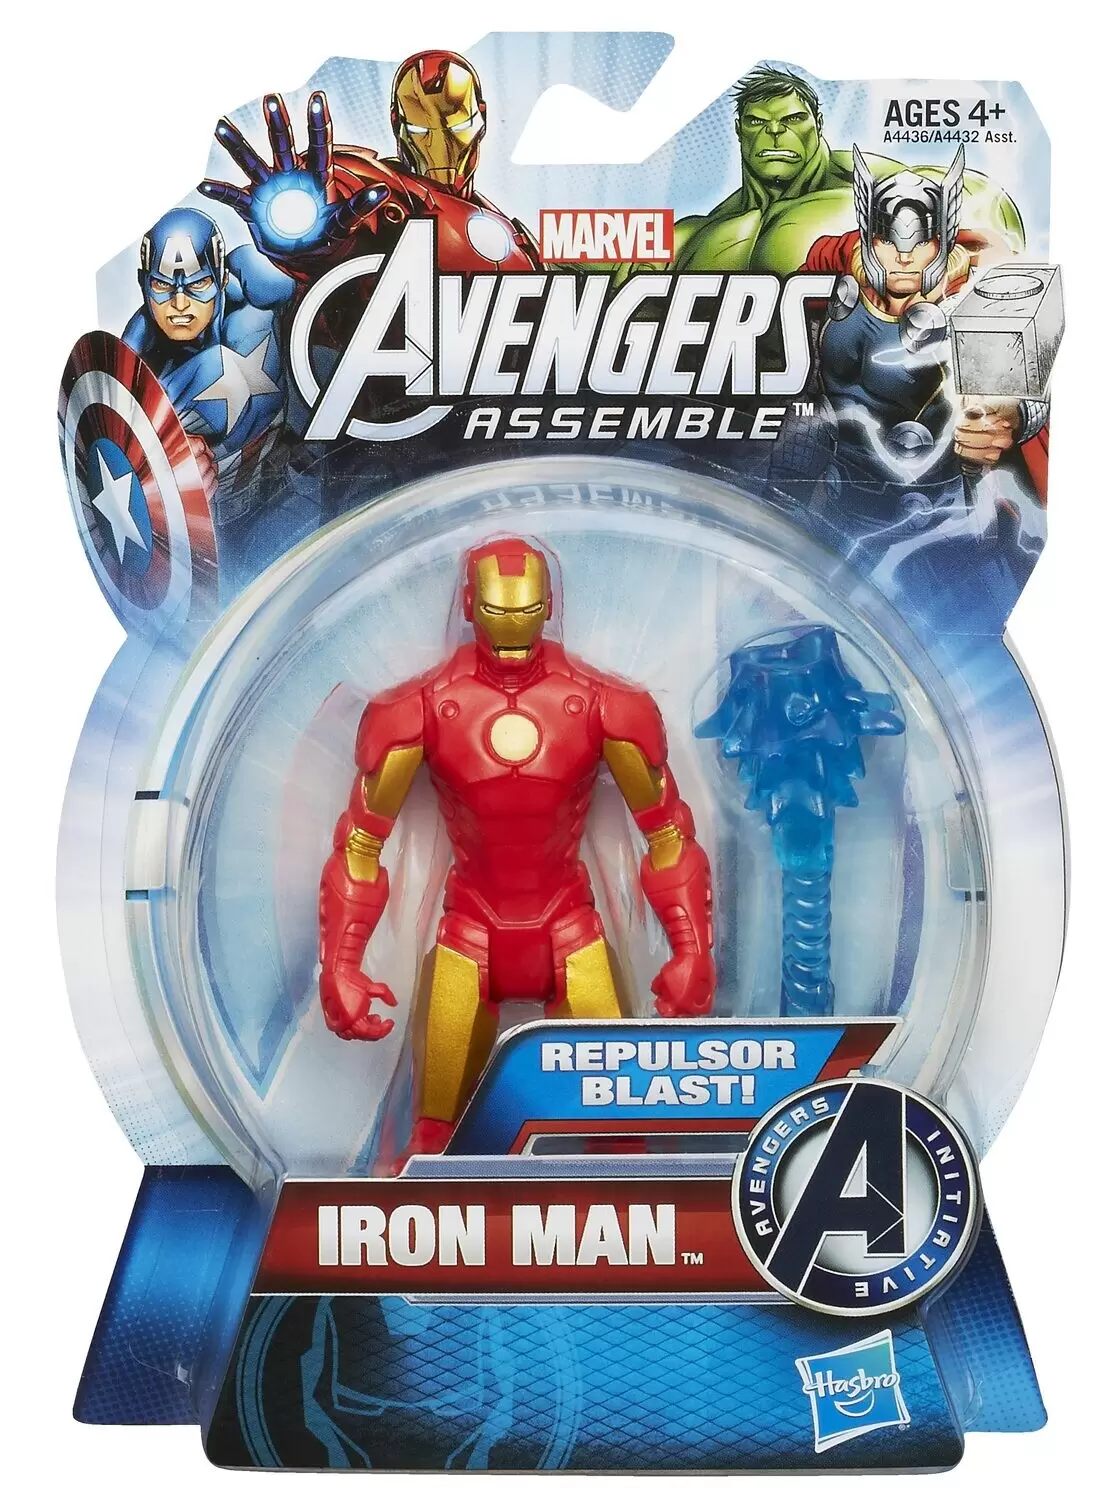 Avengers Assemble Action Figures - Iron Man